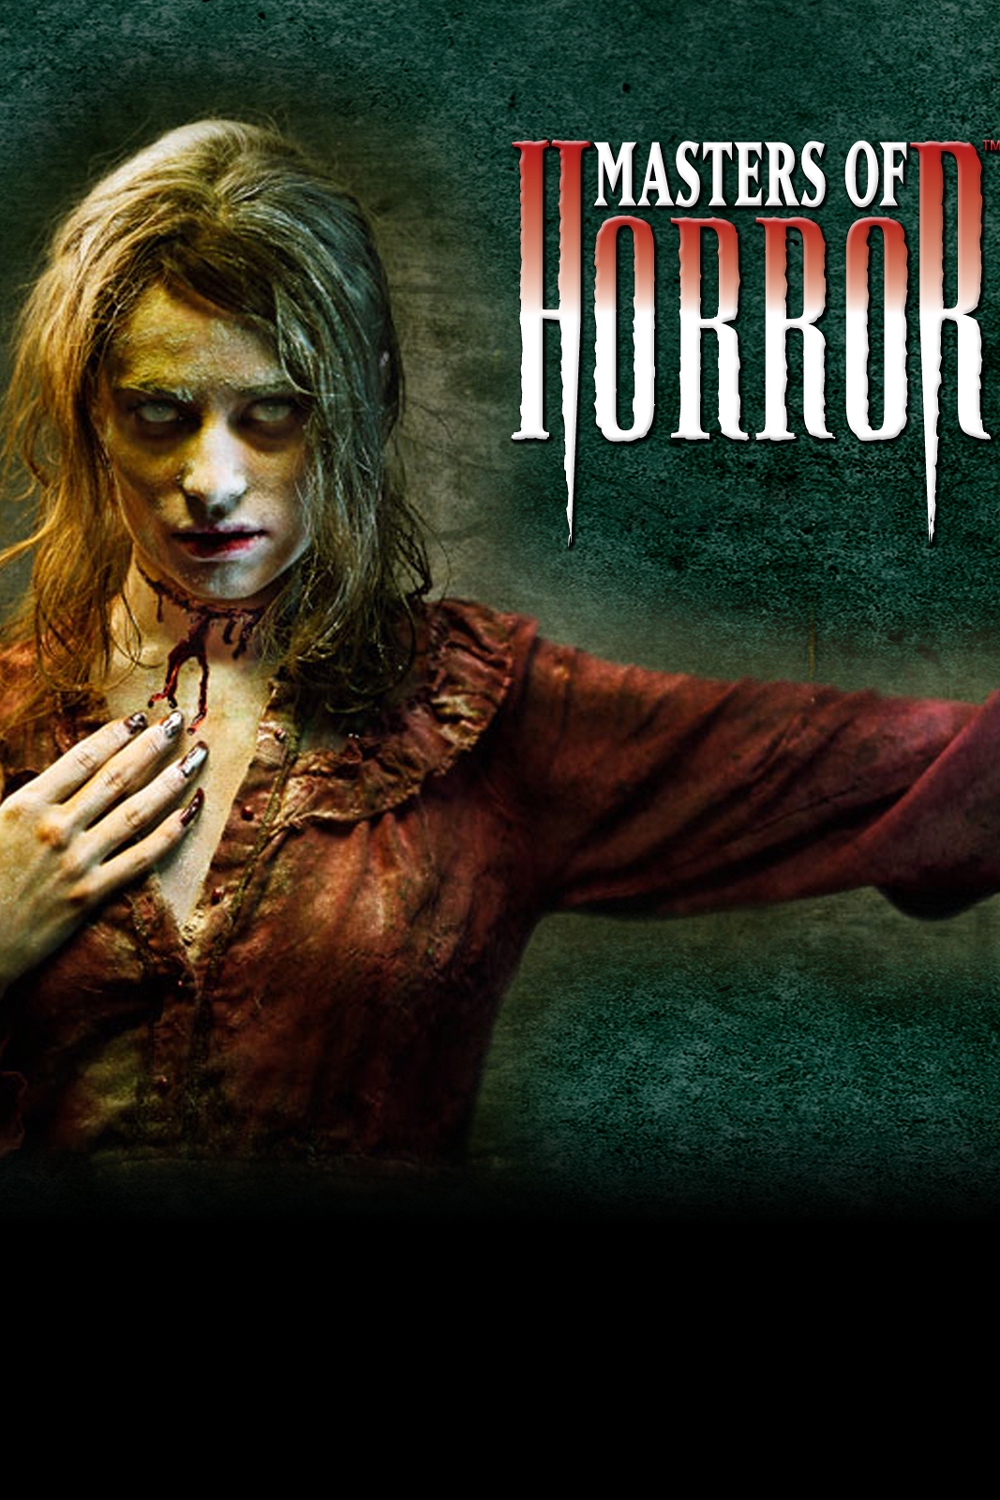 Watch Masters of Horror Online | Stream Seasons 1-2 Now | Stan